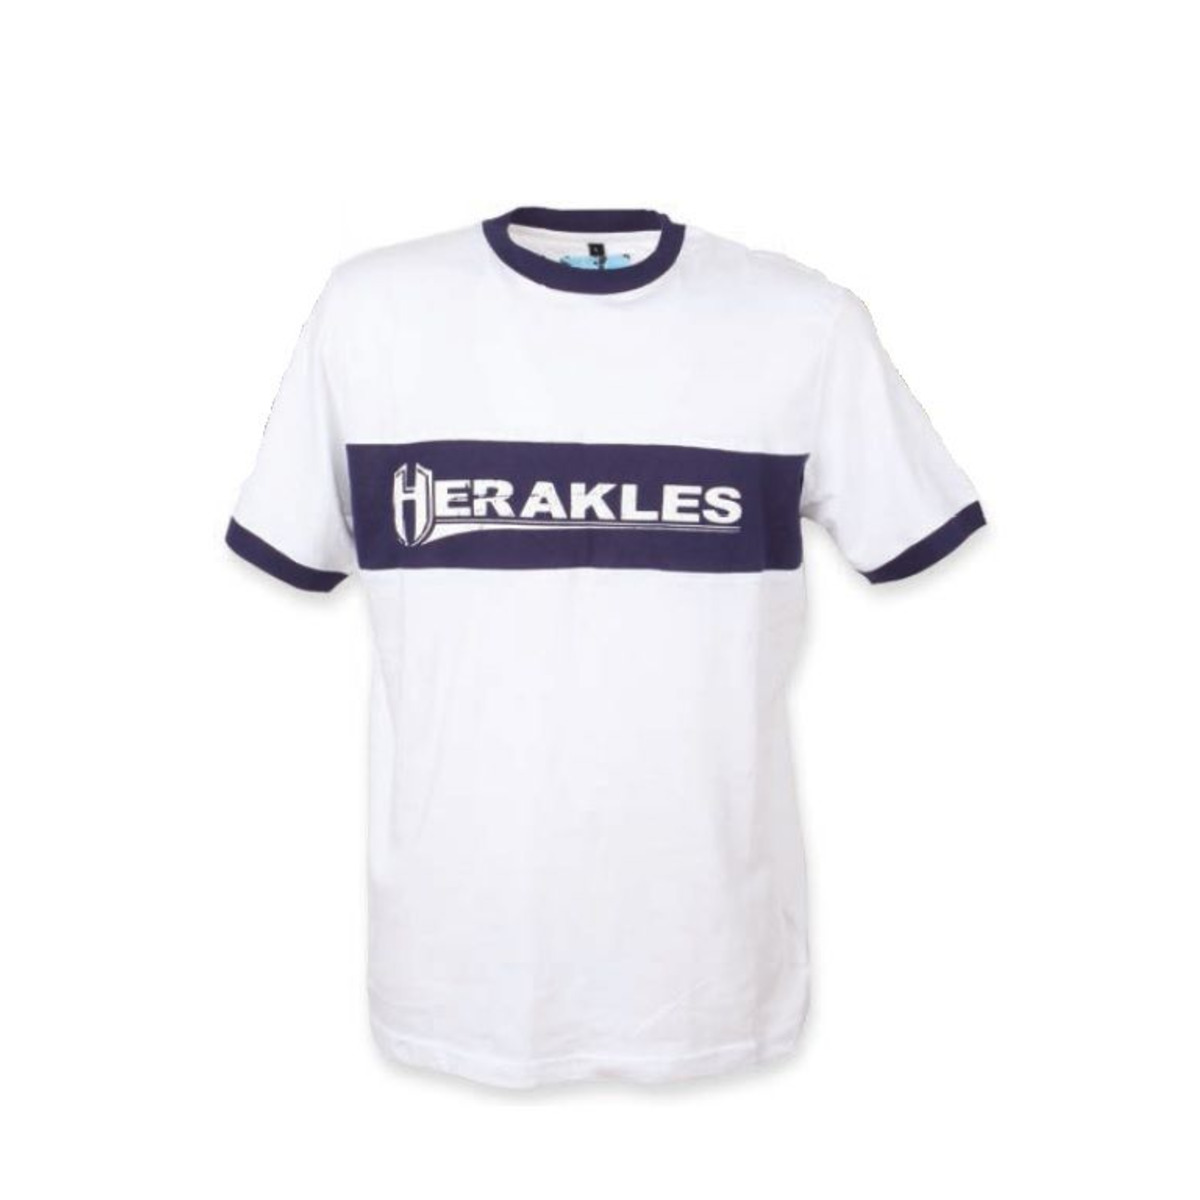 Herakles White-Blue T-Shirt - S